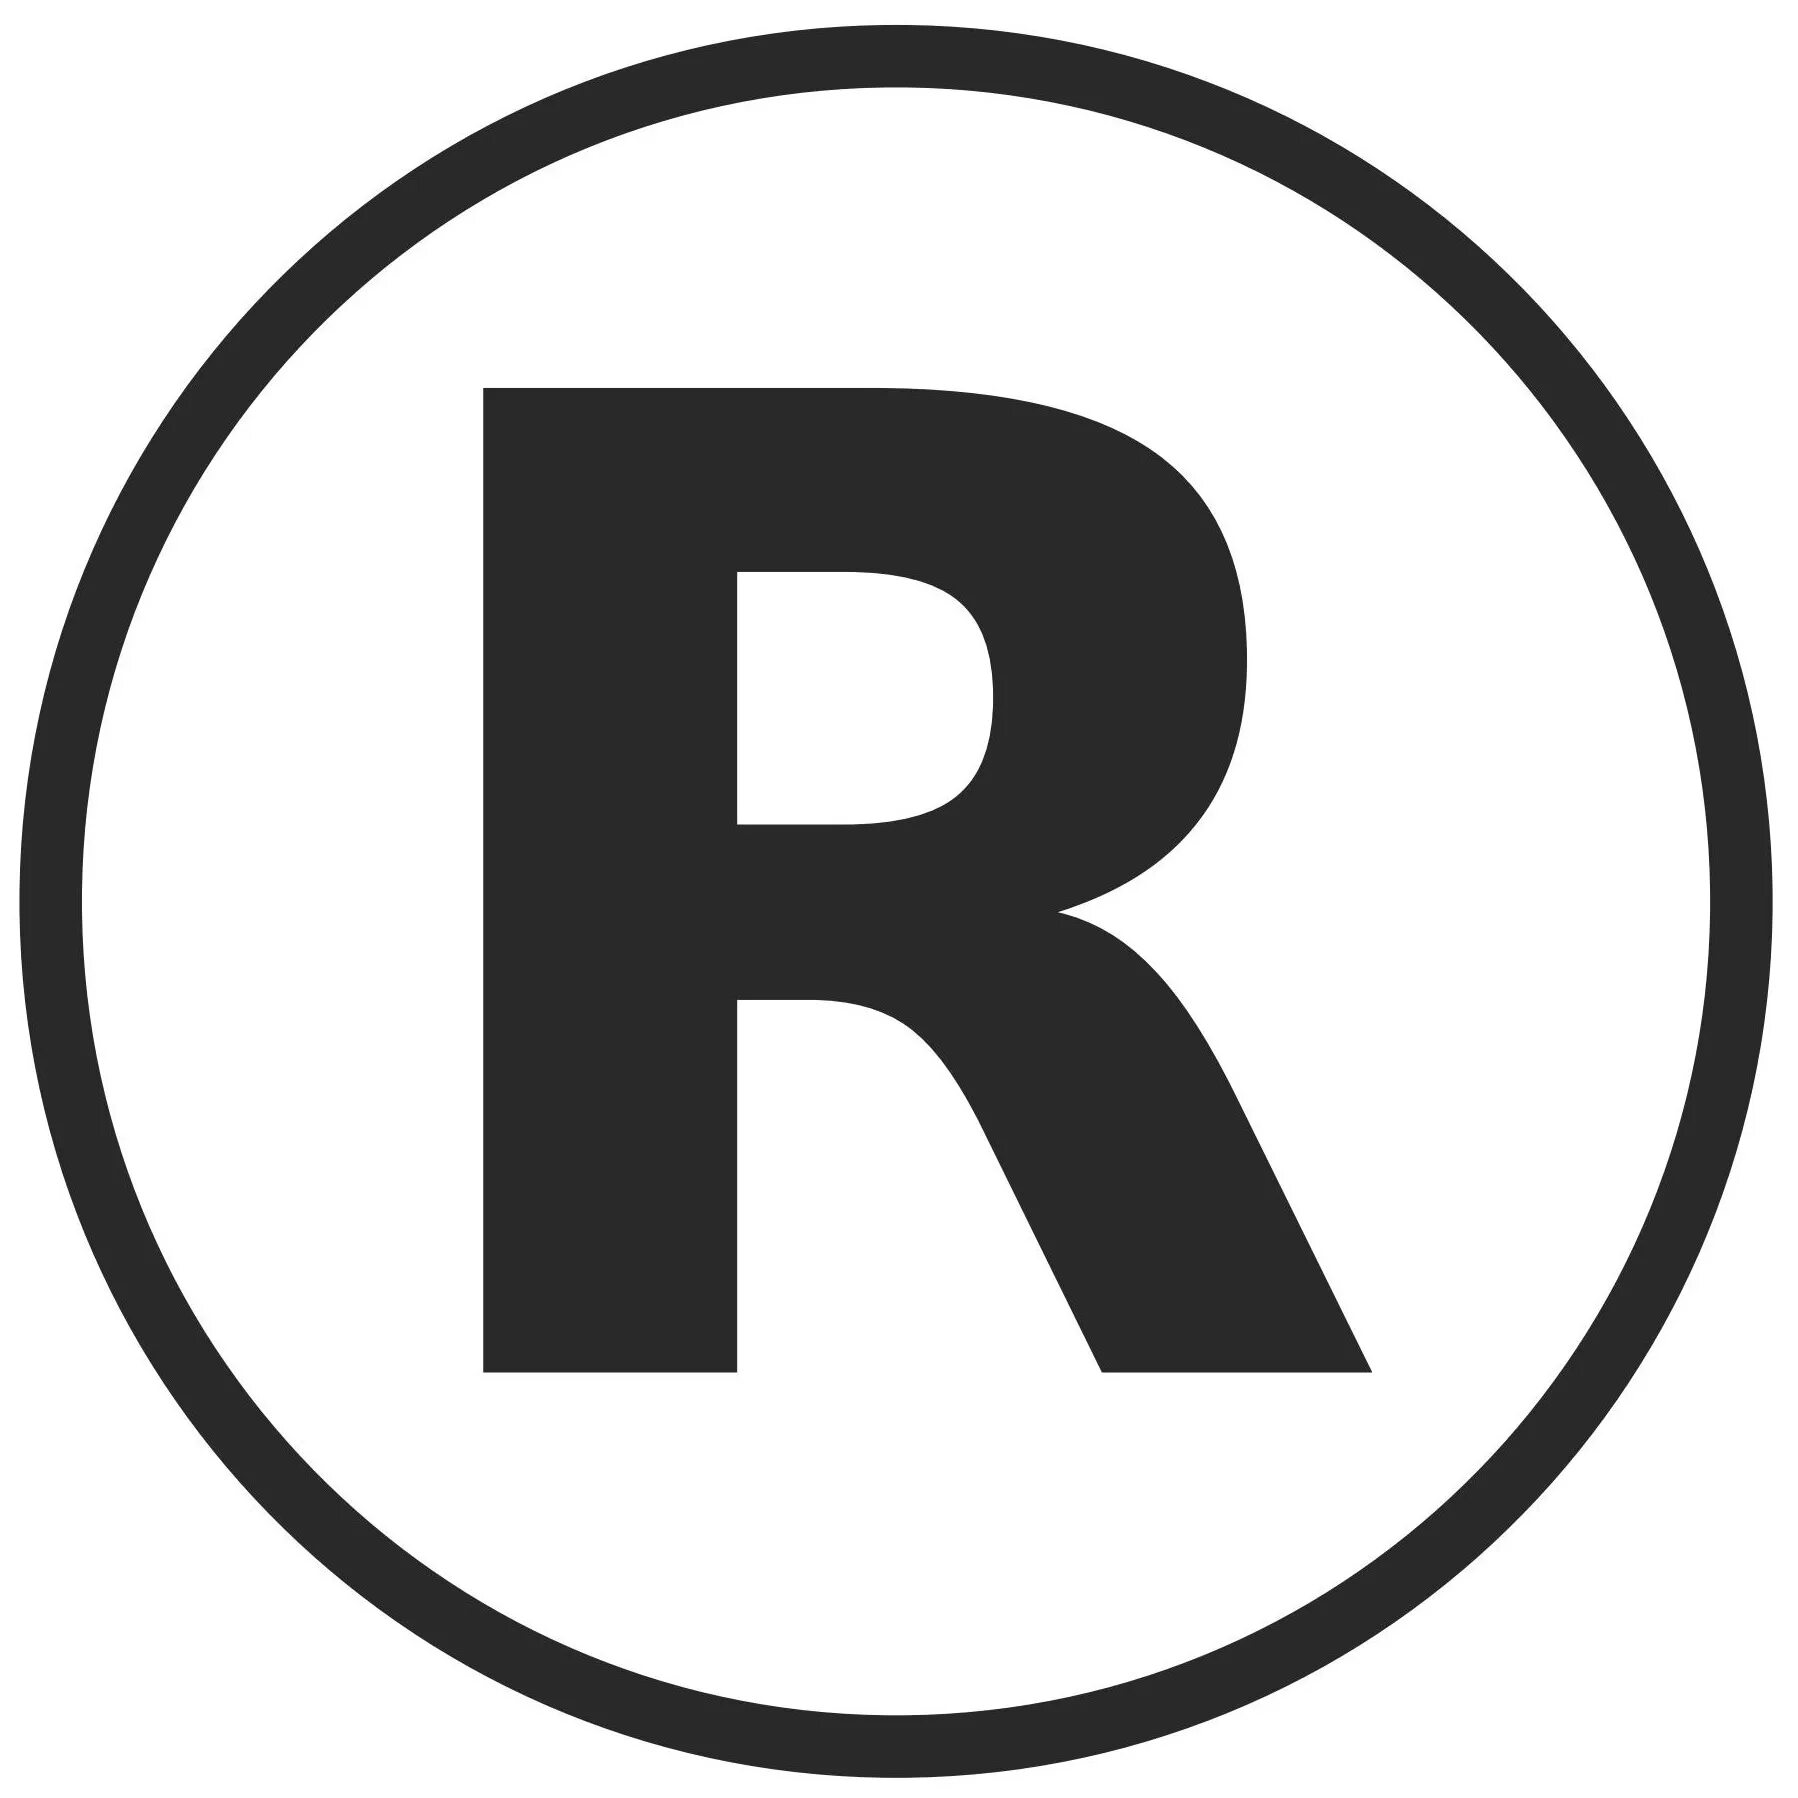 Логотип r. Буква r. Значок буквы r. Эмблема с буквой r. В черном круге буква